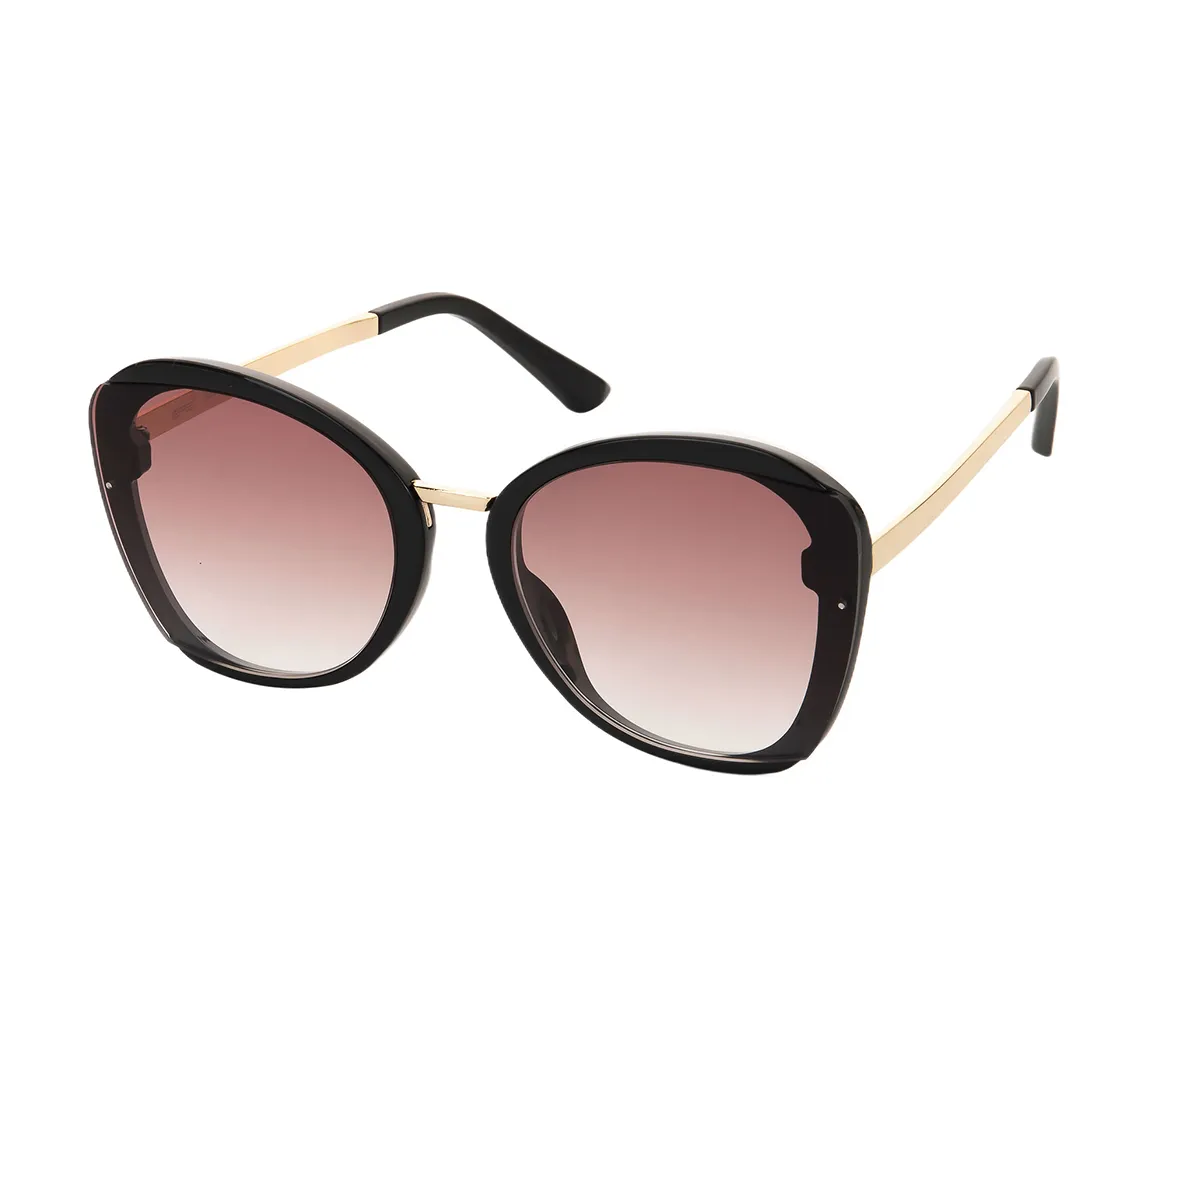 Mara - Oval Black Sunglasses for Women